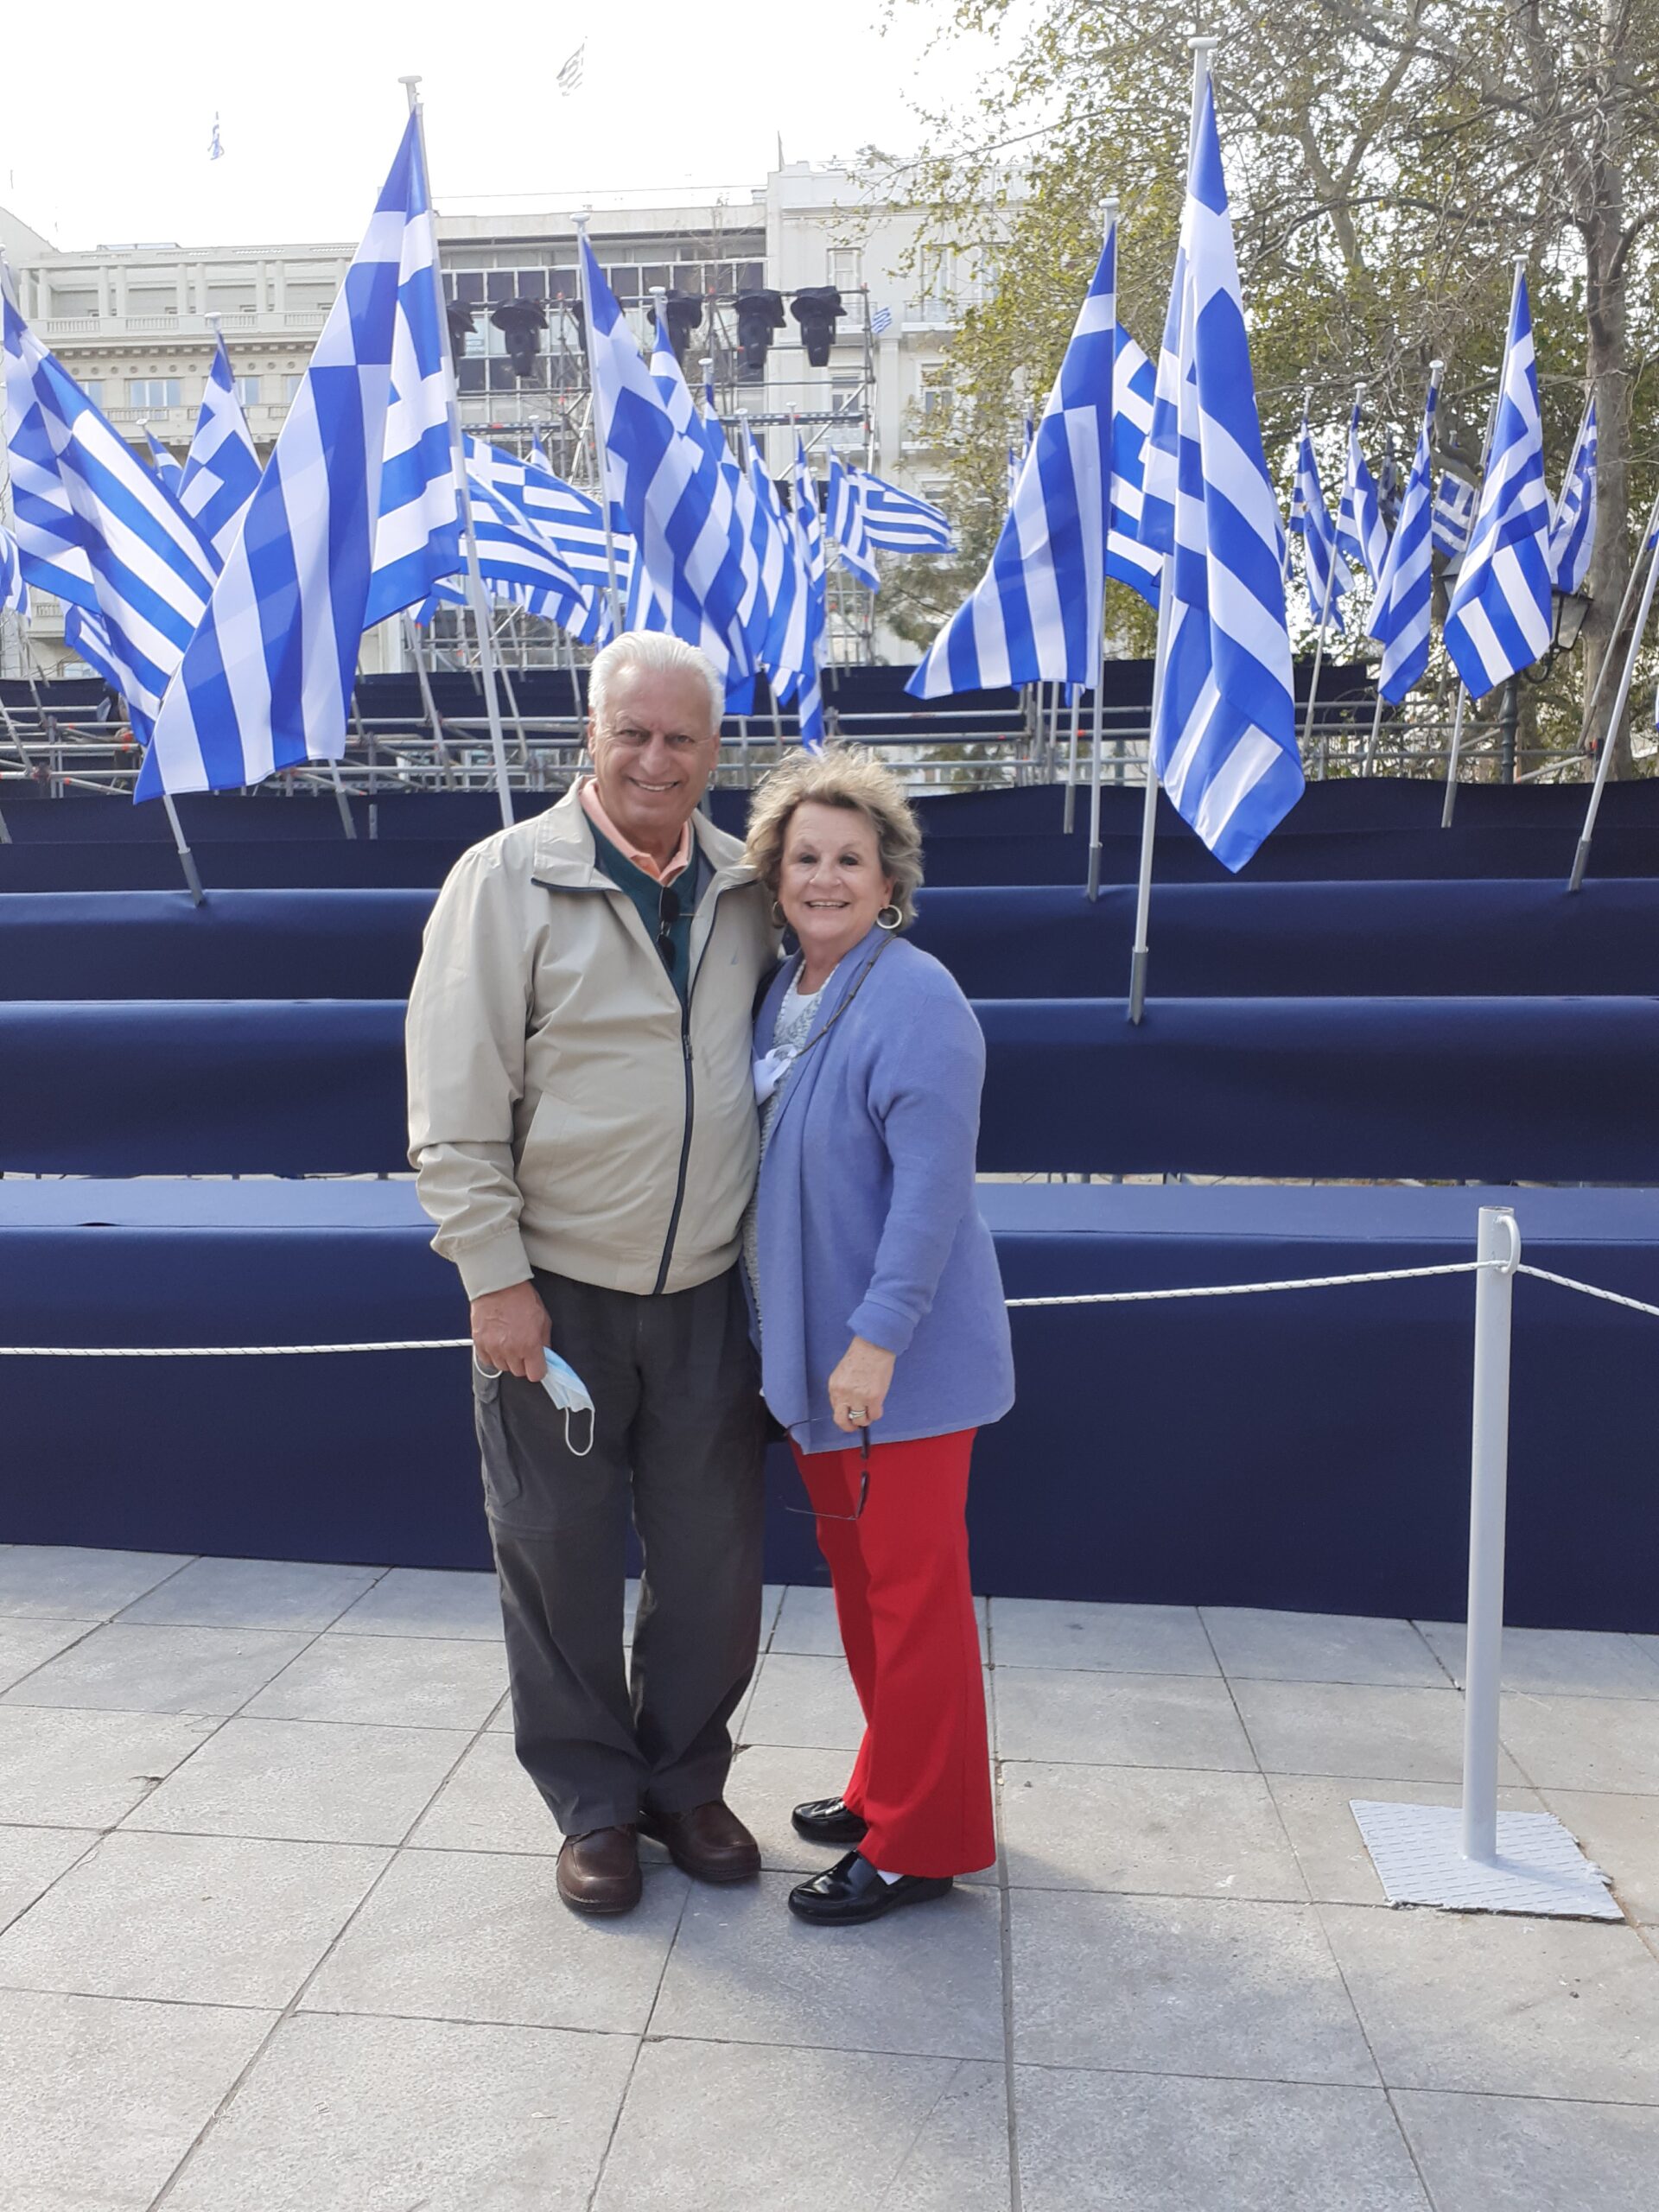 HALF A YEAR IN GREECE